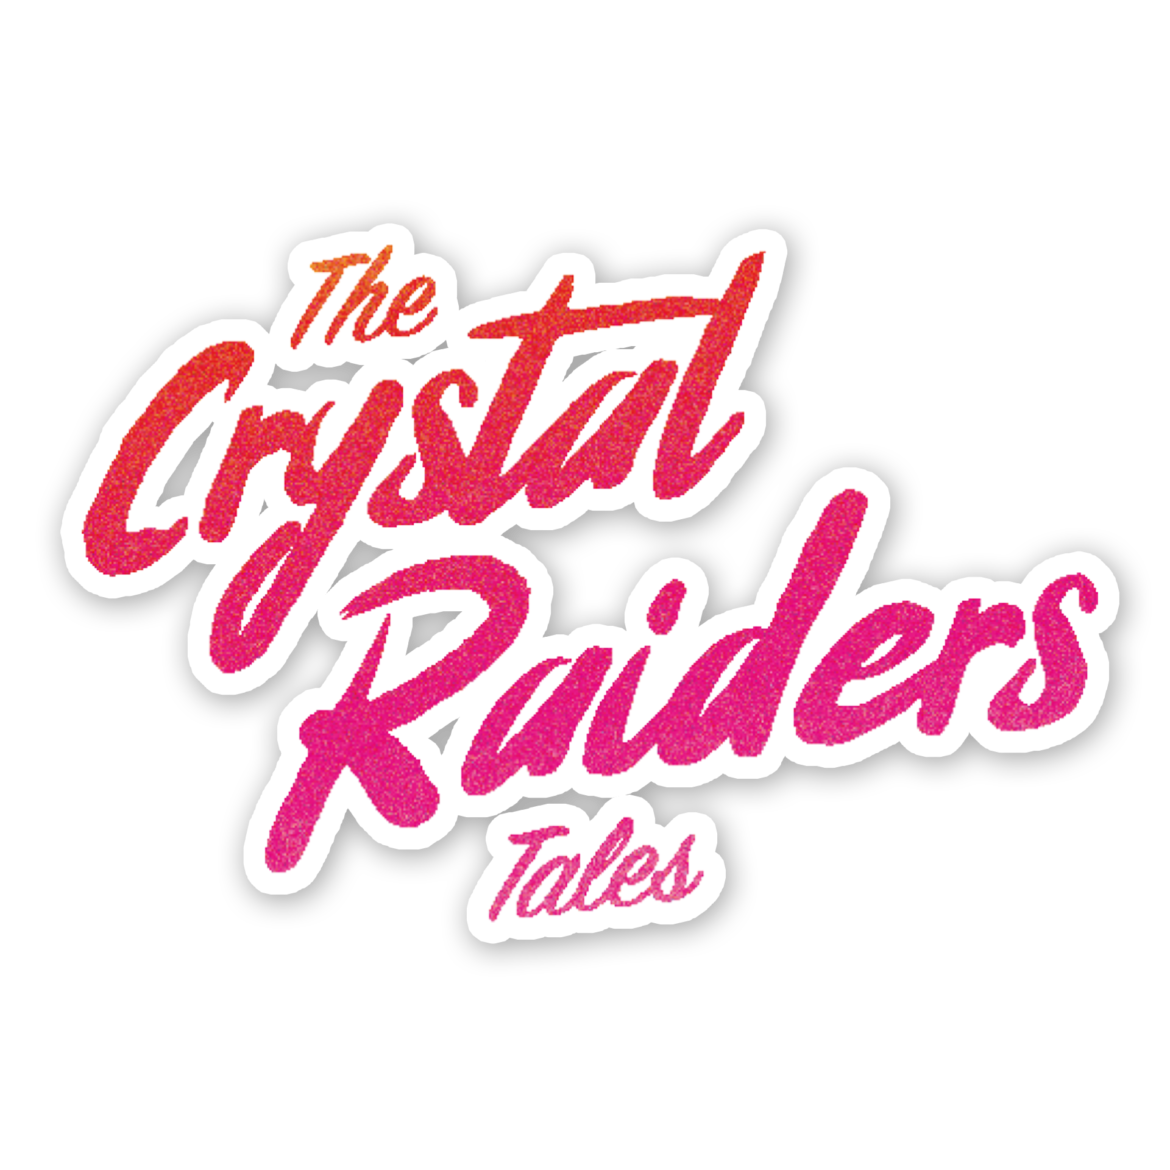 The Crystal Raiders Tales logo shadow, indegame, videp game